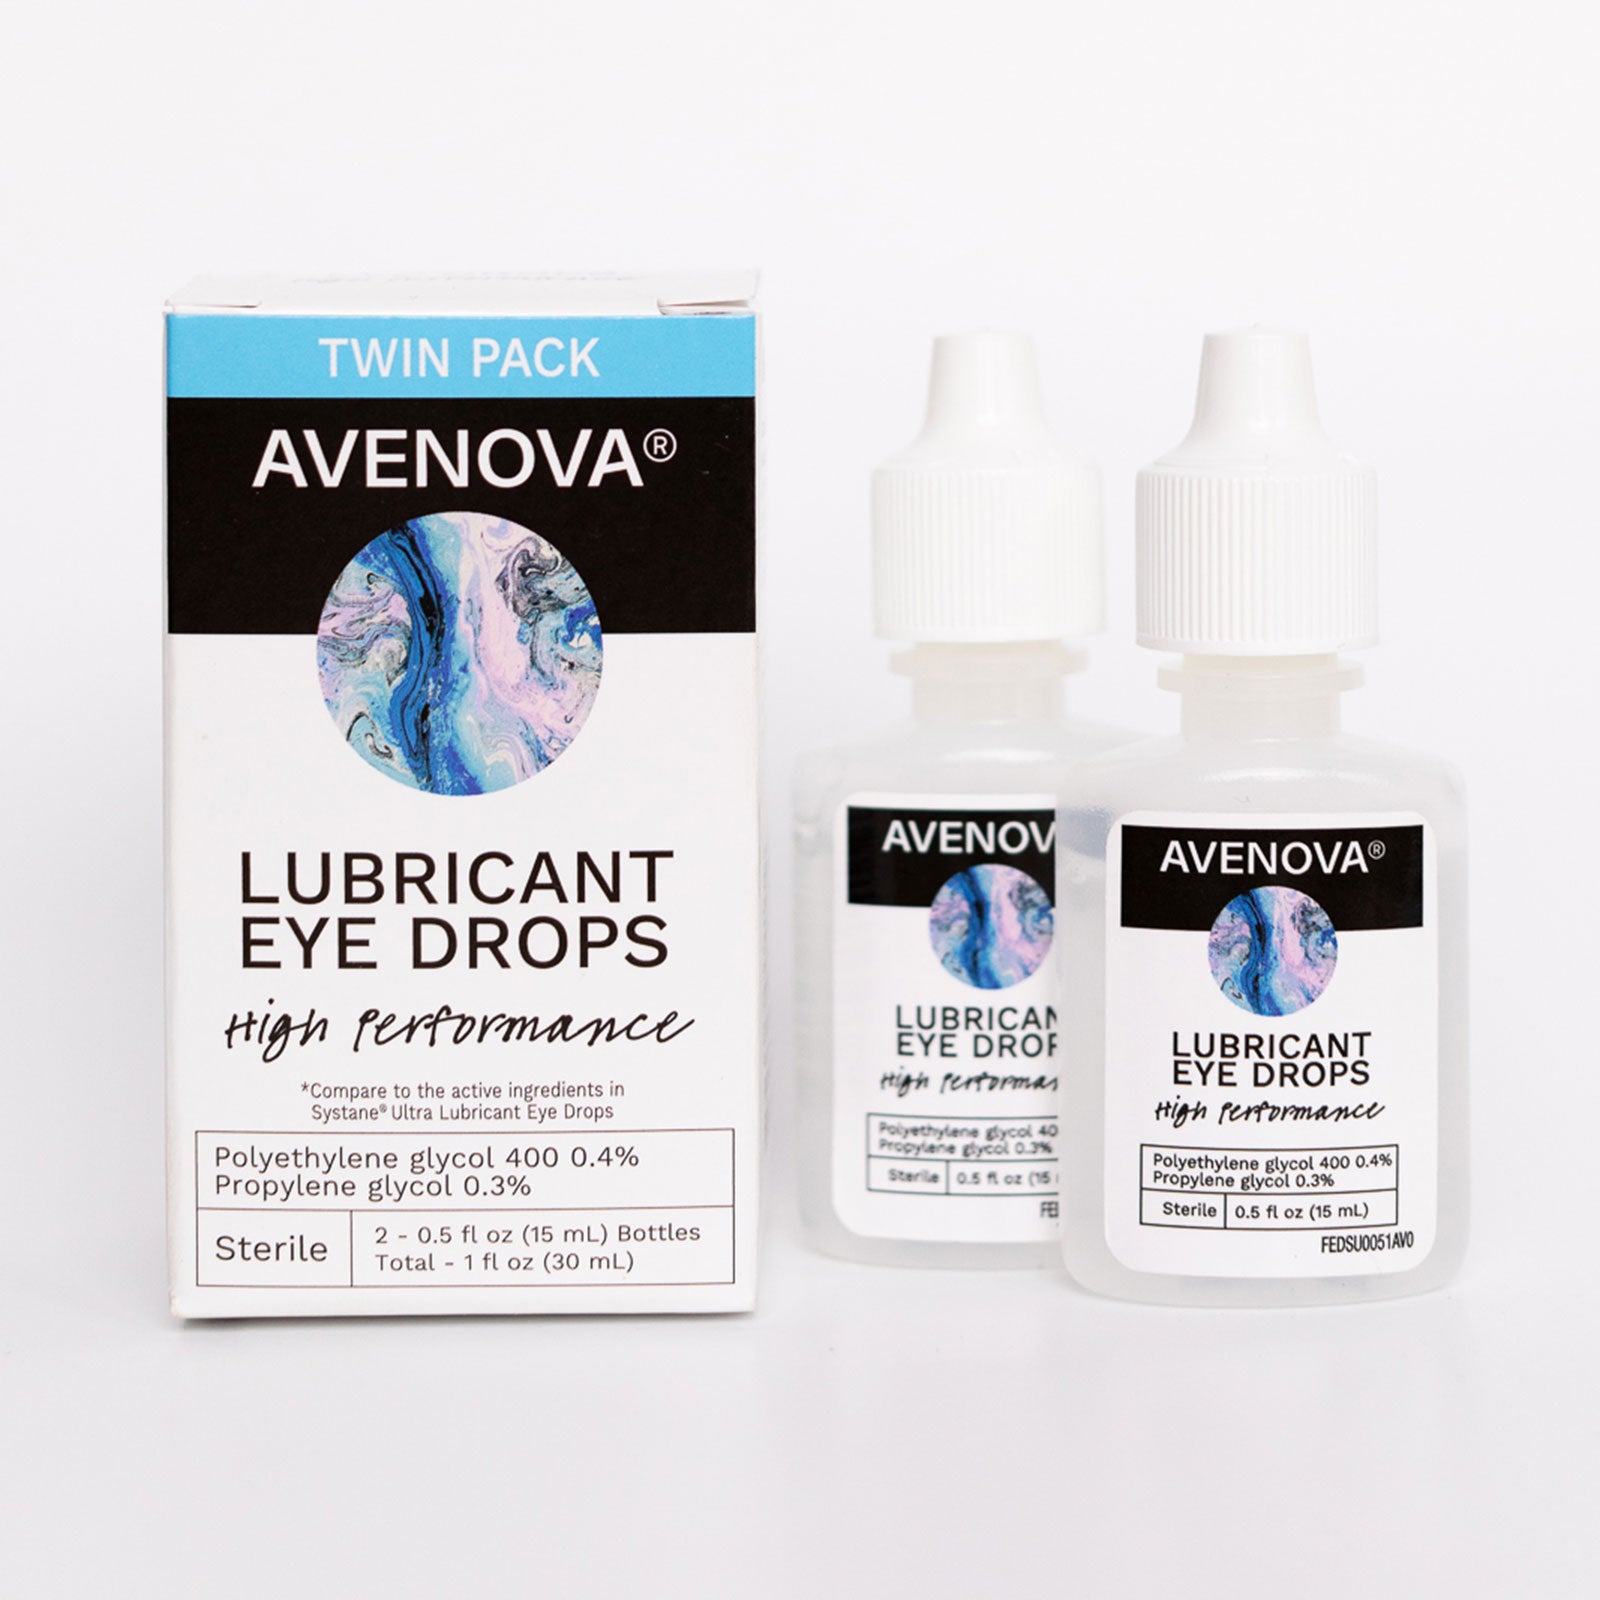 Avenova Lubricant Eye Drops (Twin Pack) - 15 ml. Bottles $14.99 + Free Shipping